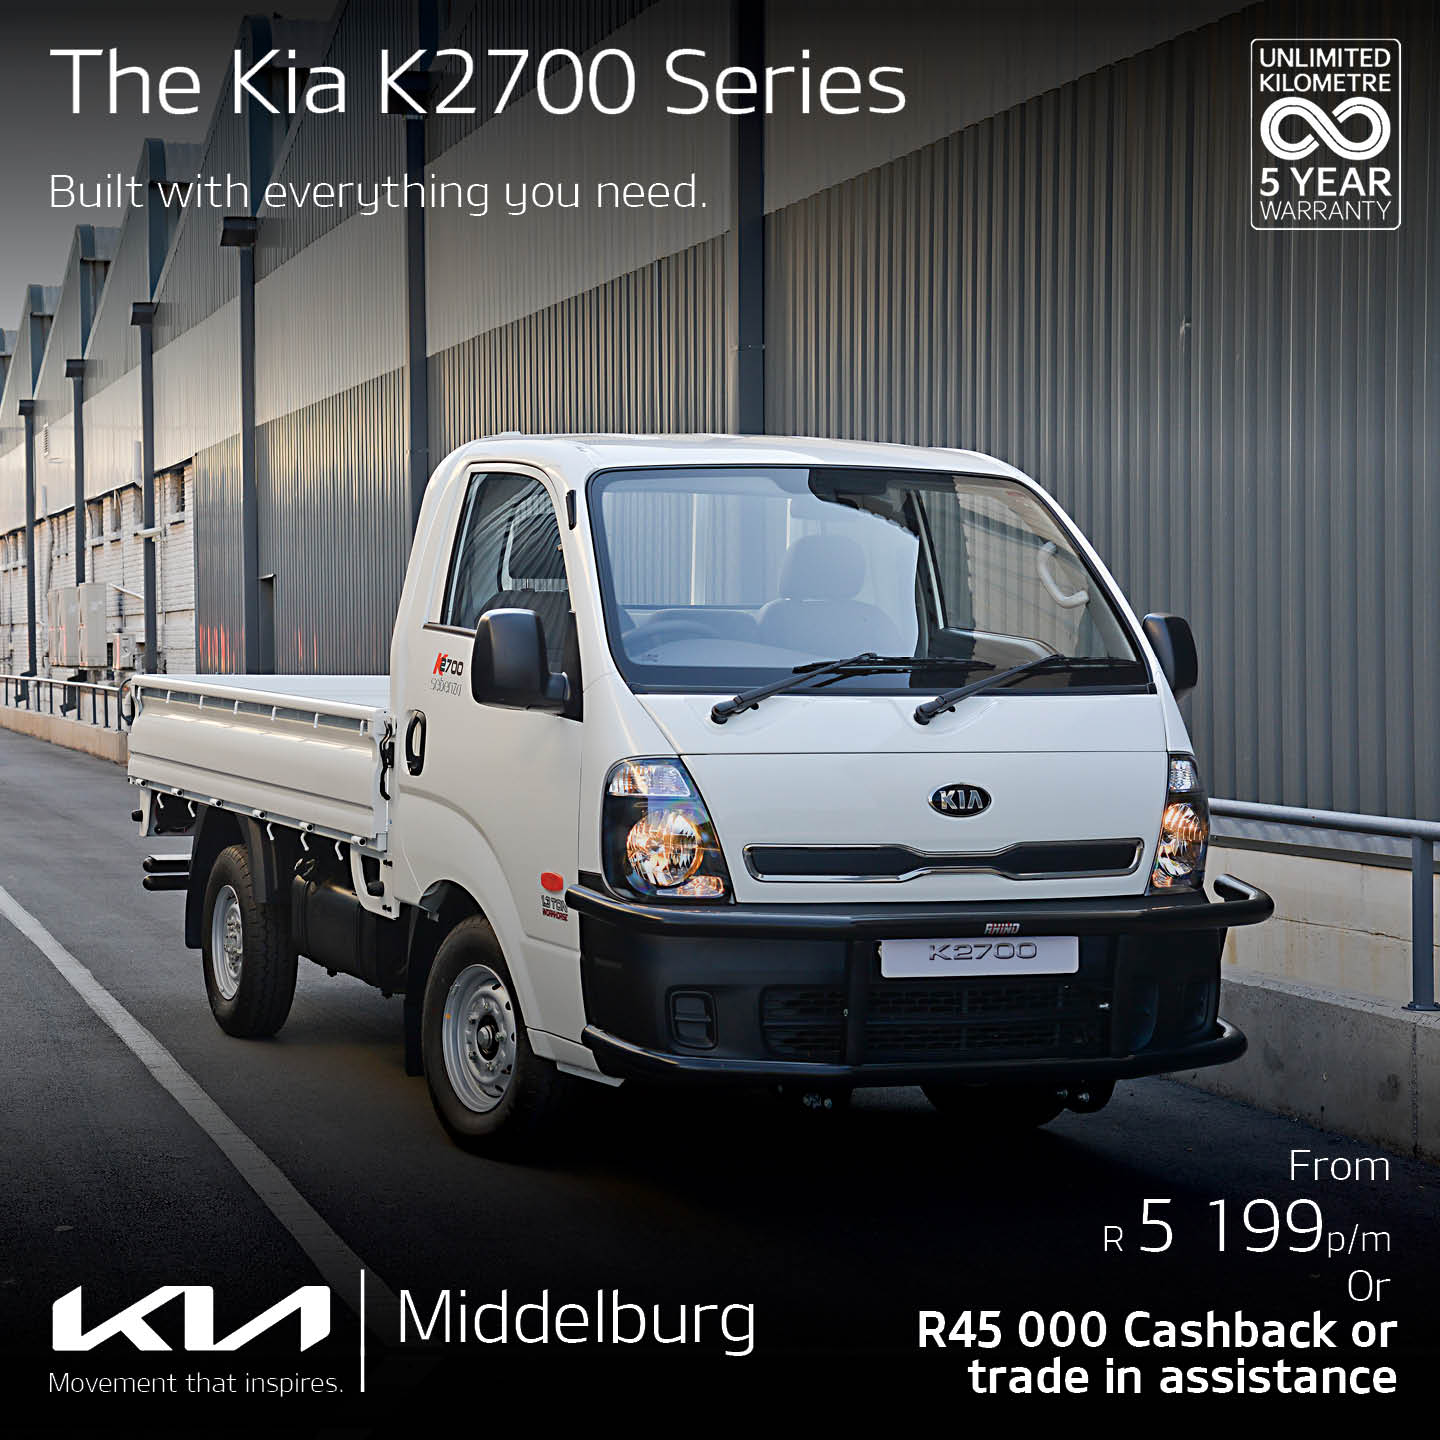 KIA K2700 series image from 